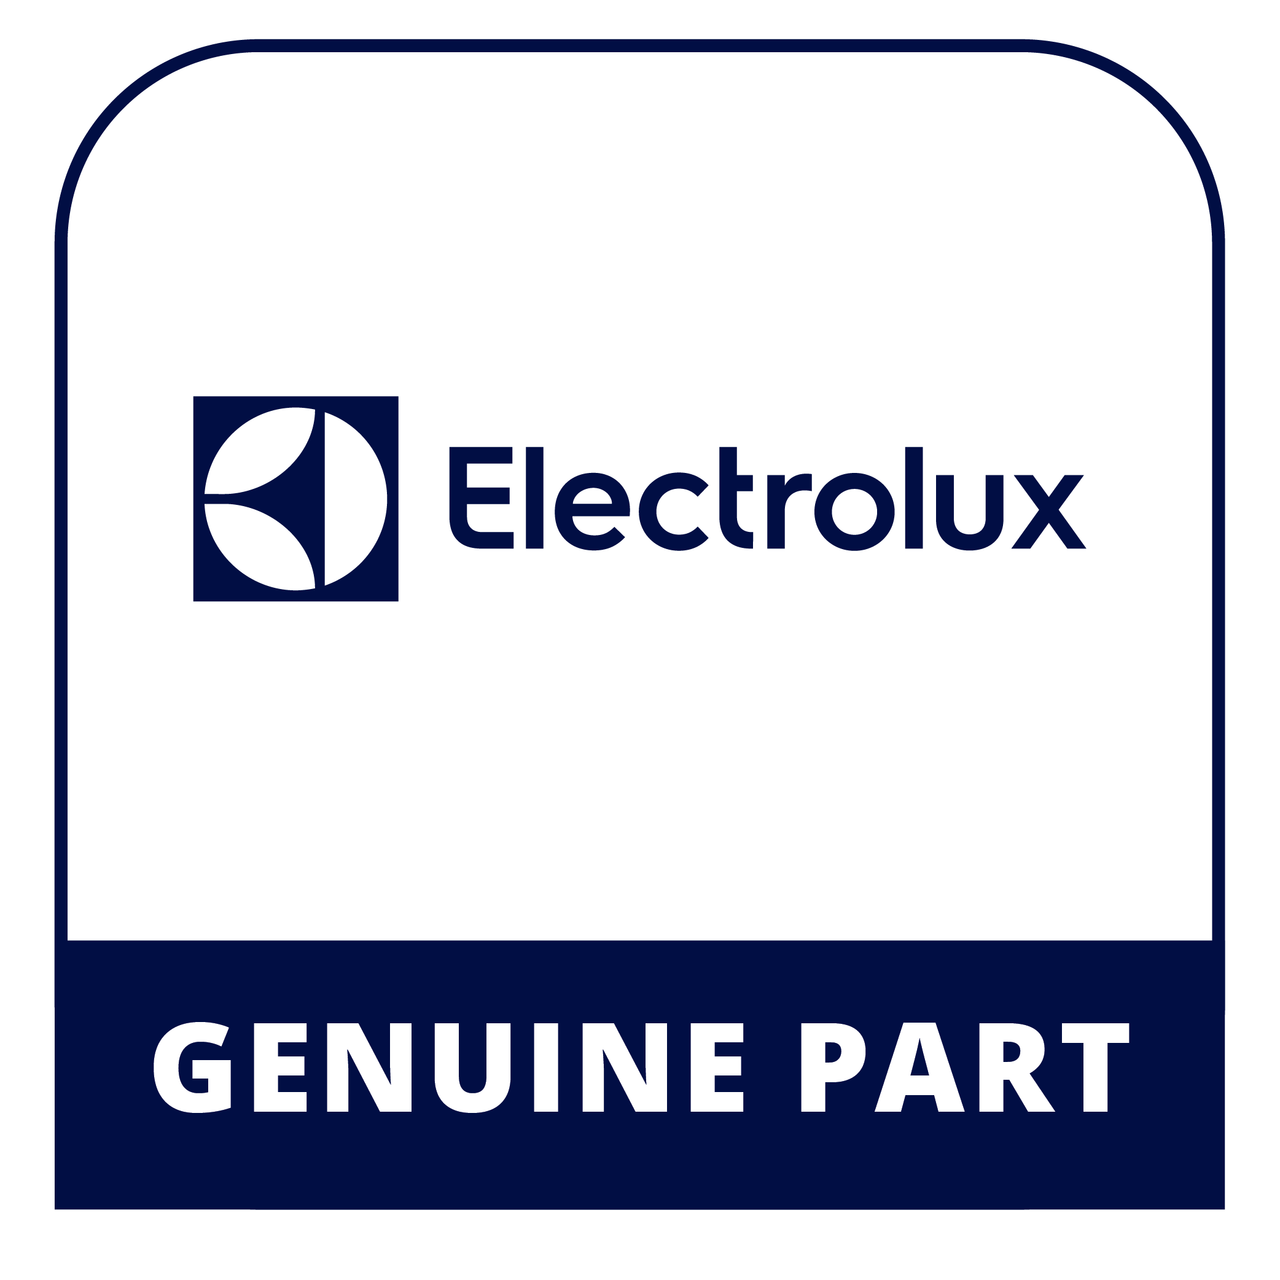 Frigidaire - Electrolux 316419146 - Overlay - Genuine Electrolux Part